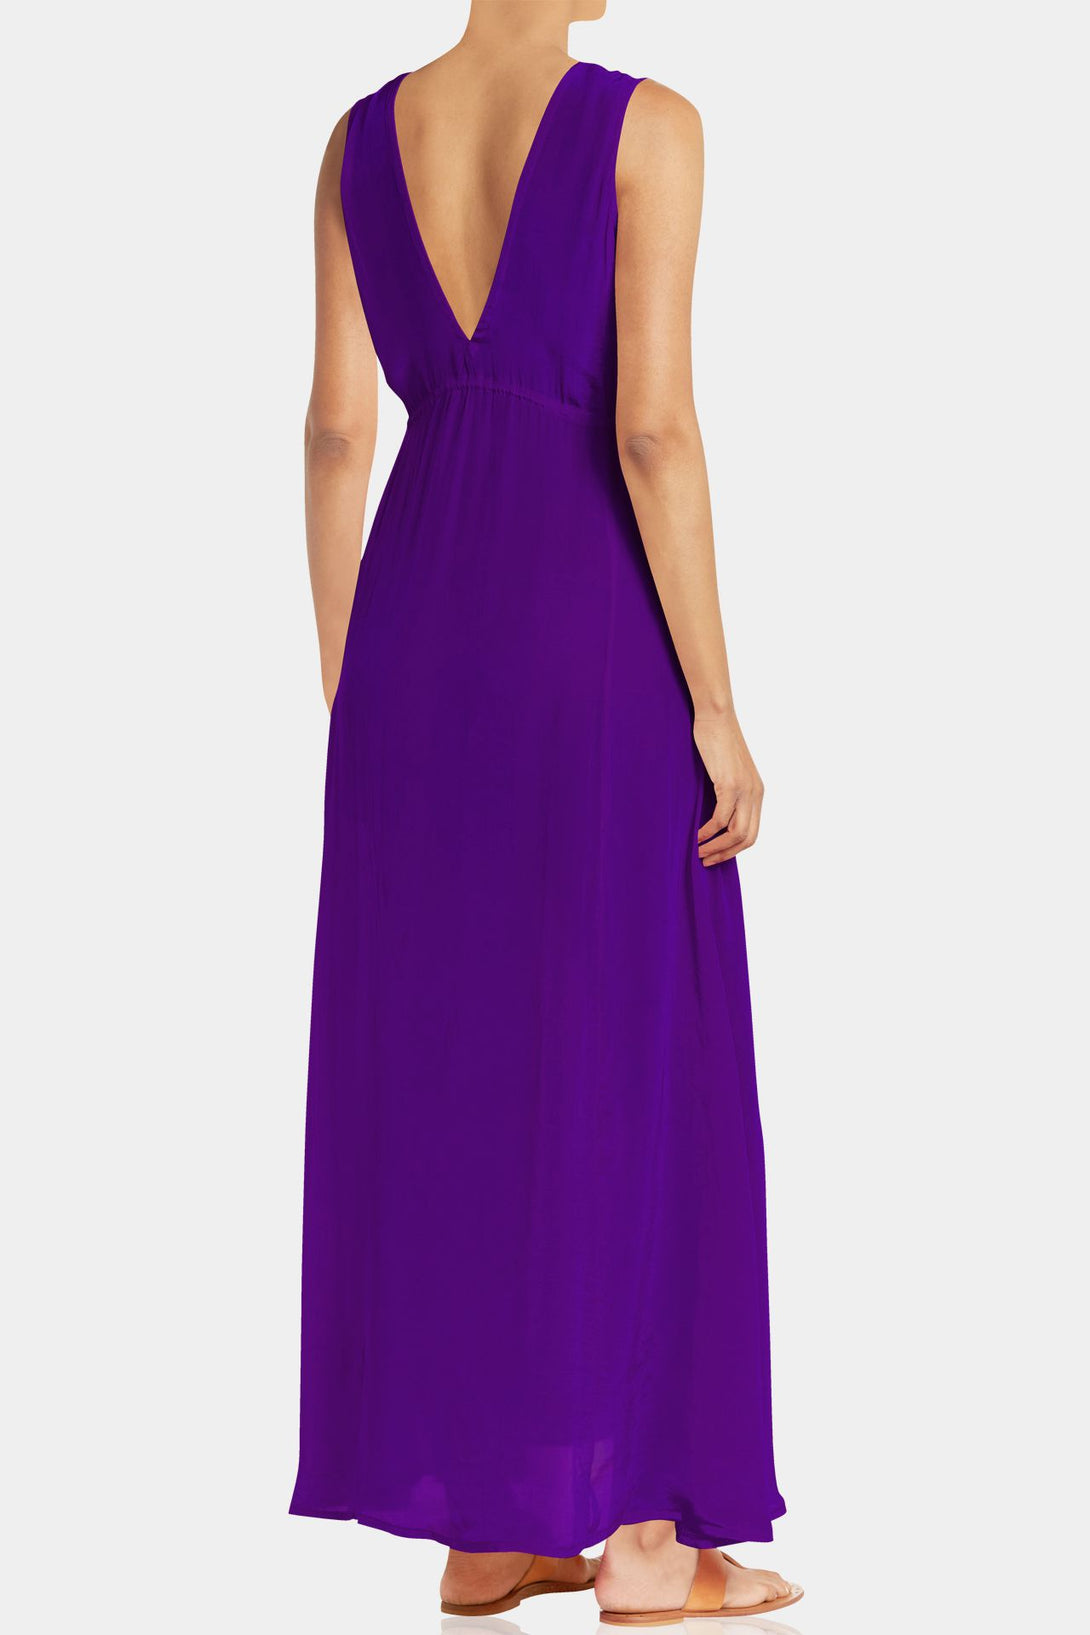  purple long dress prom, summer maxi dresses for women, plunging v neck formal dress,